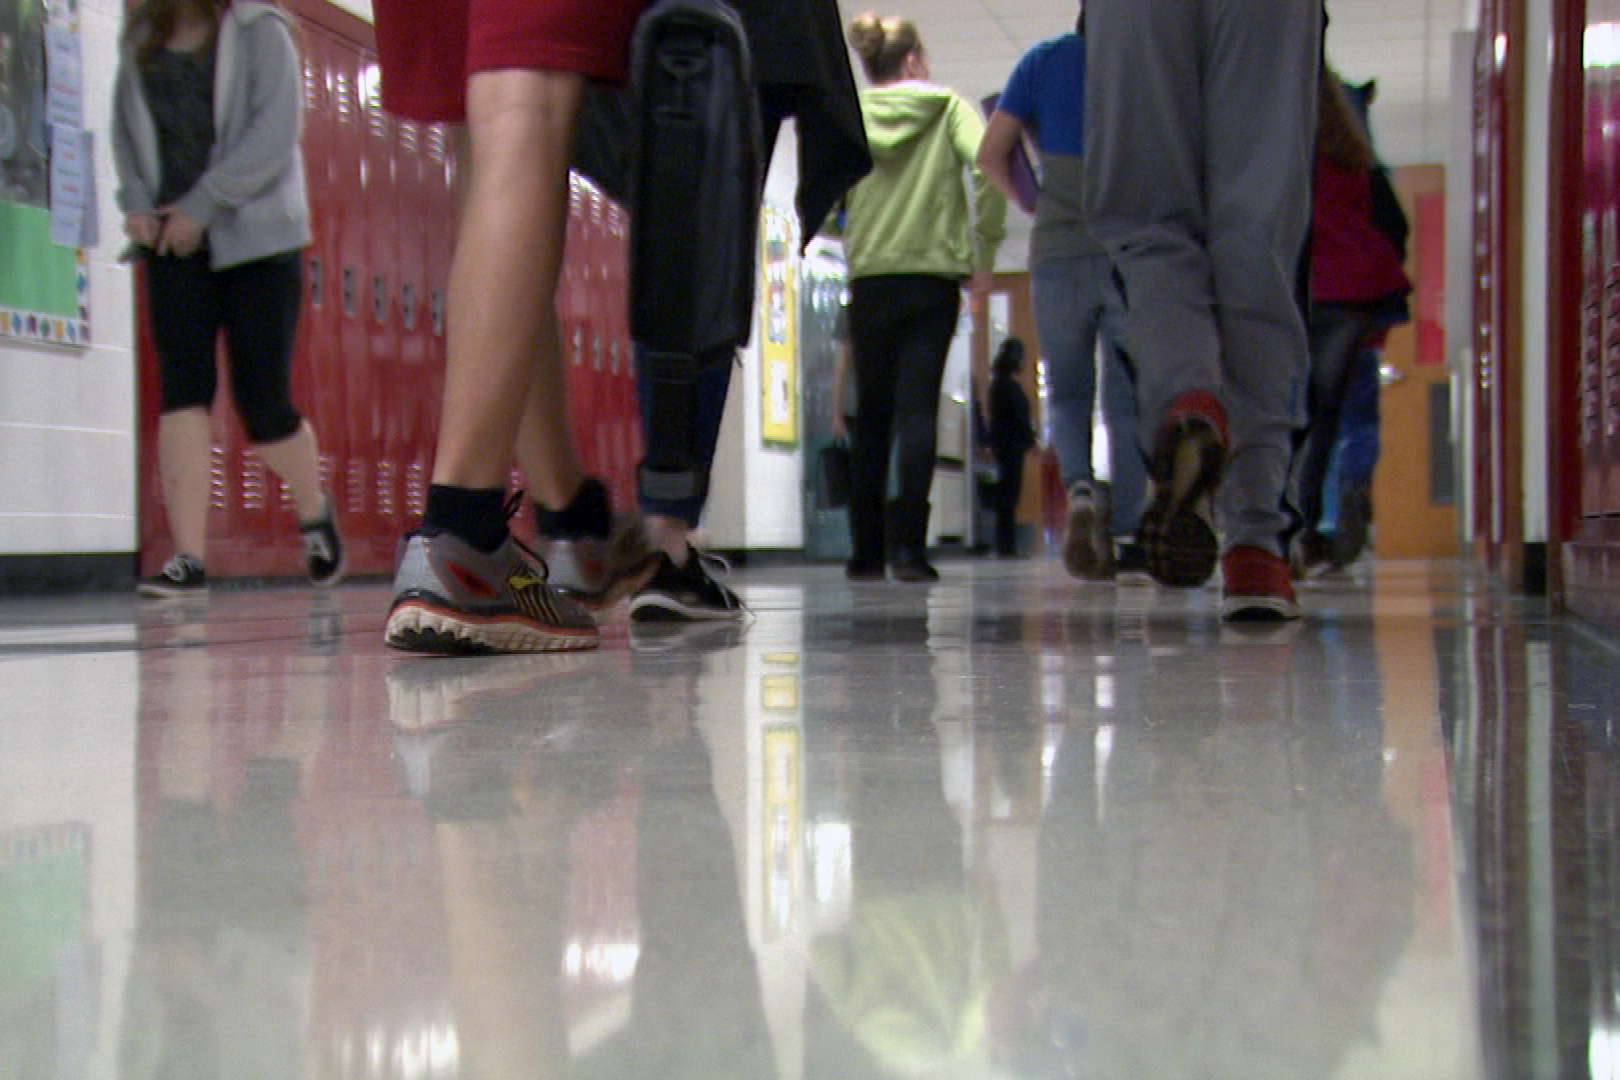 Students walk along a hallway of a high school.